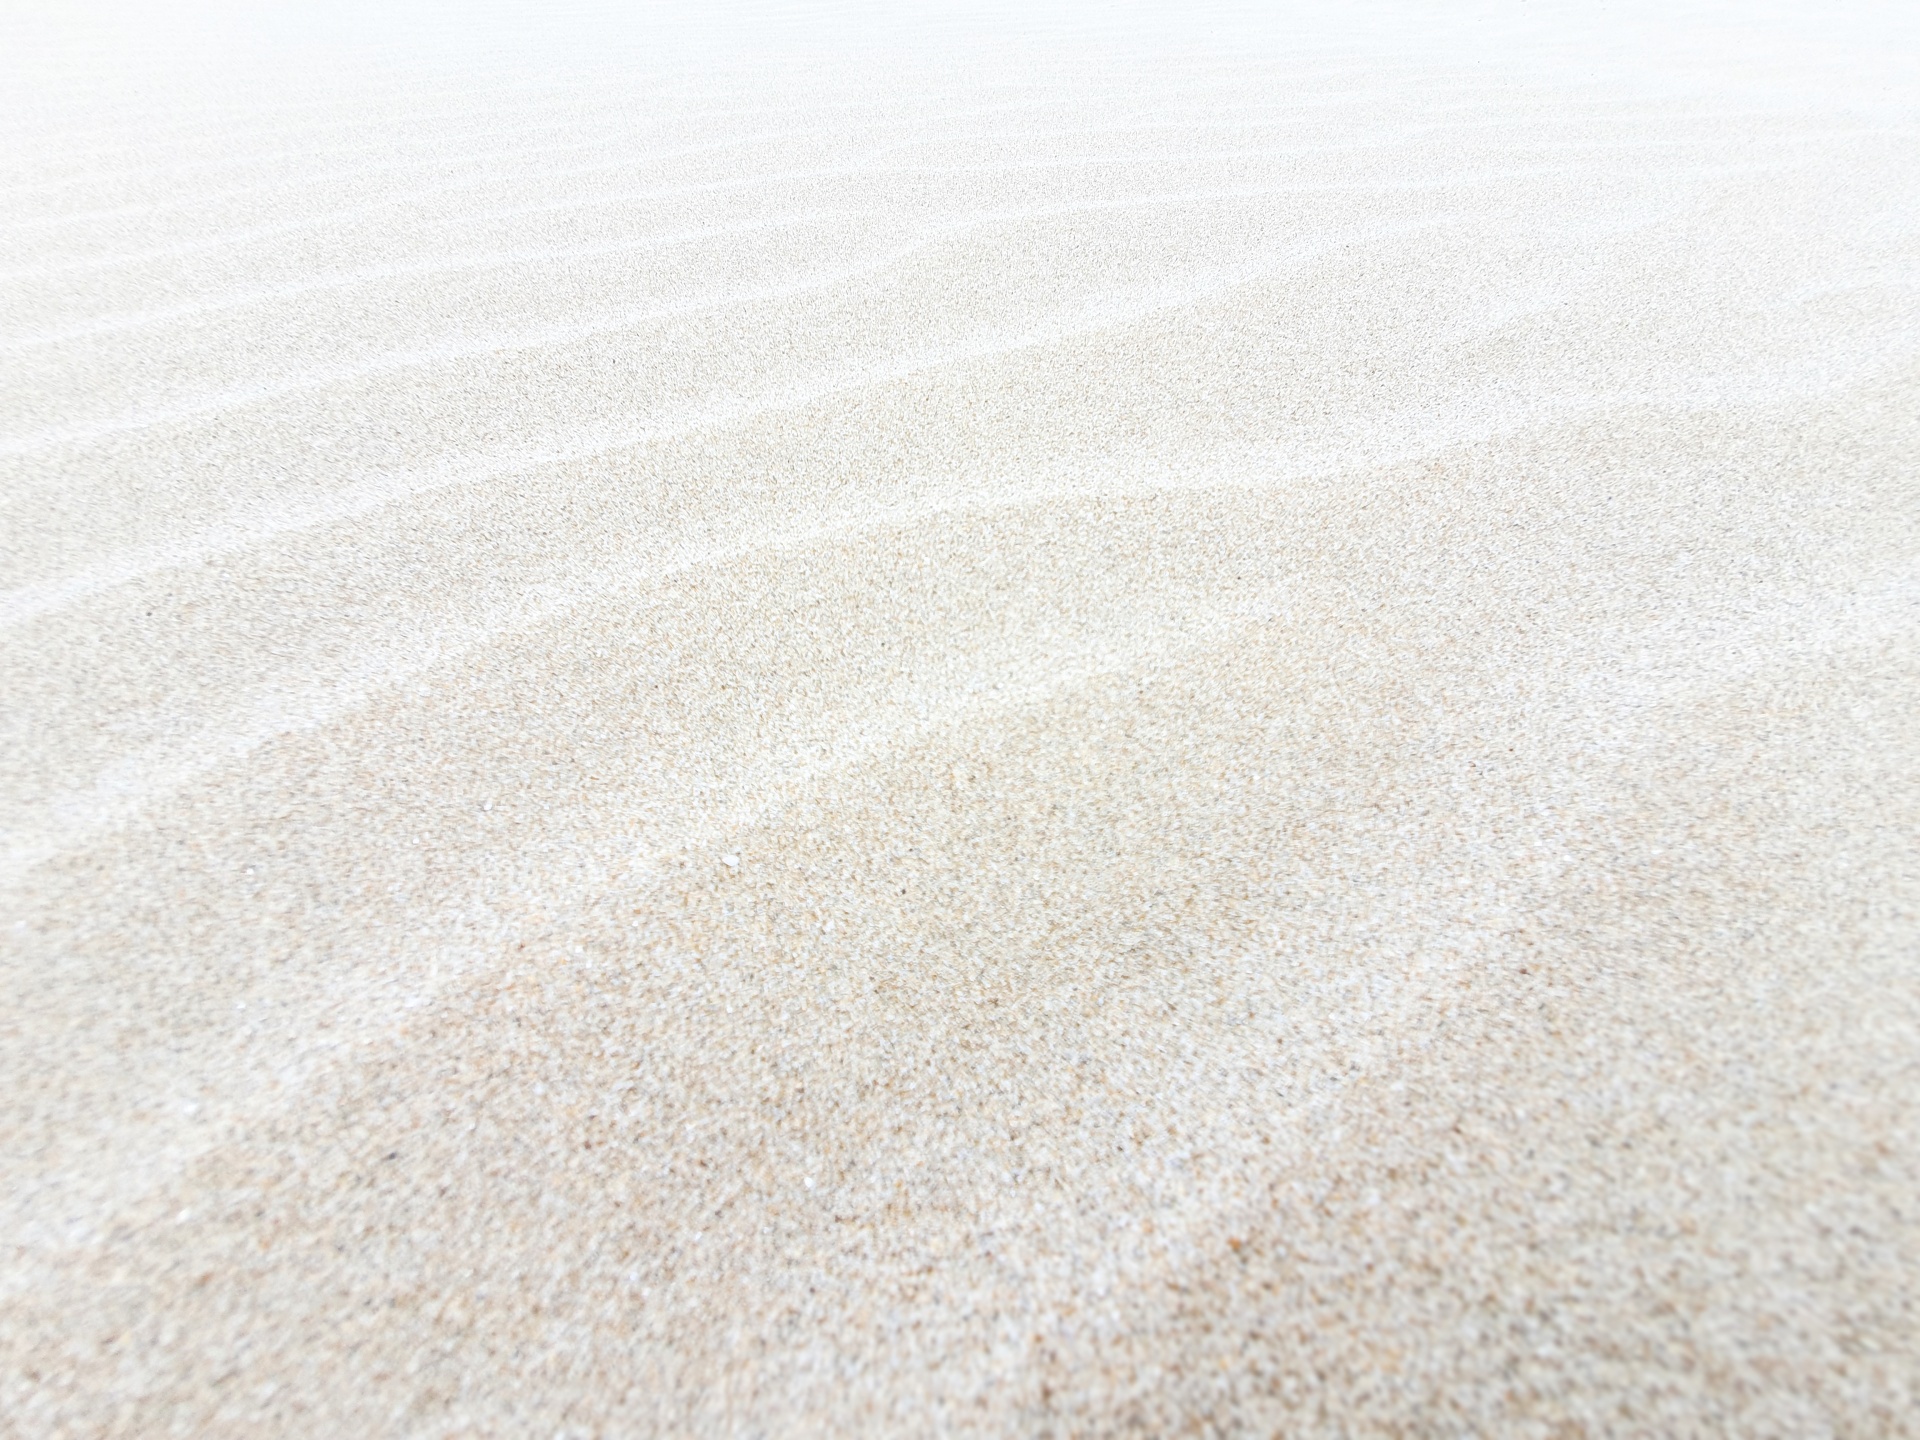 White beach sand background image